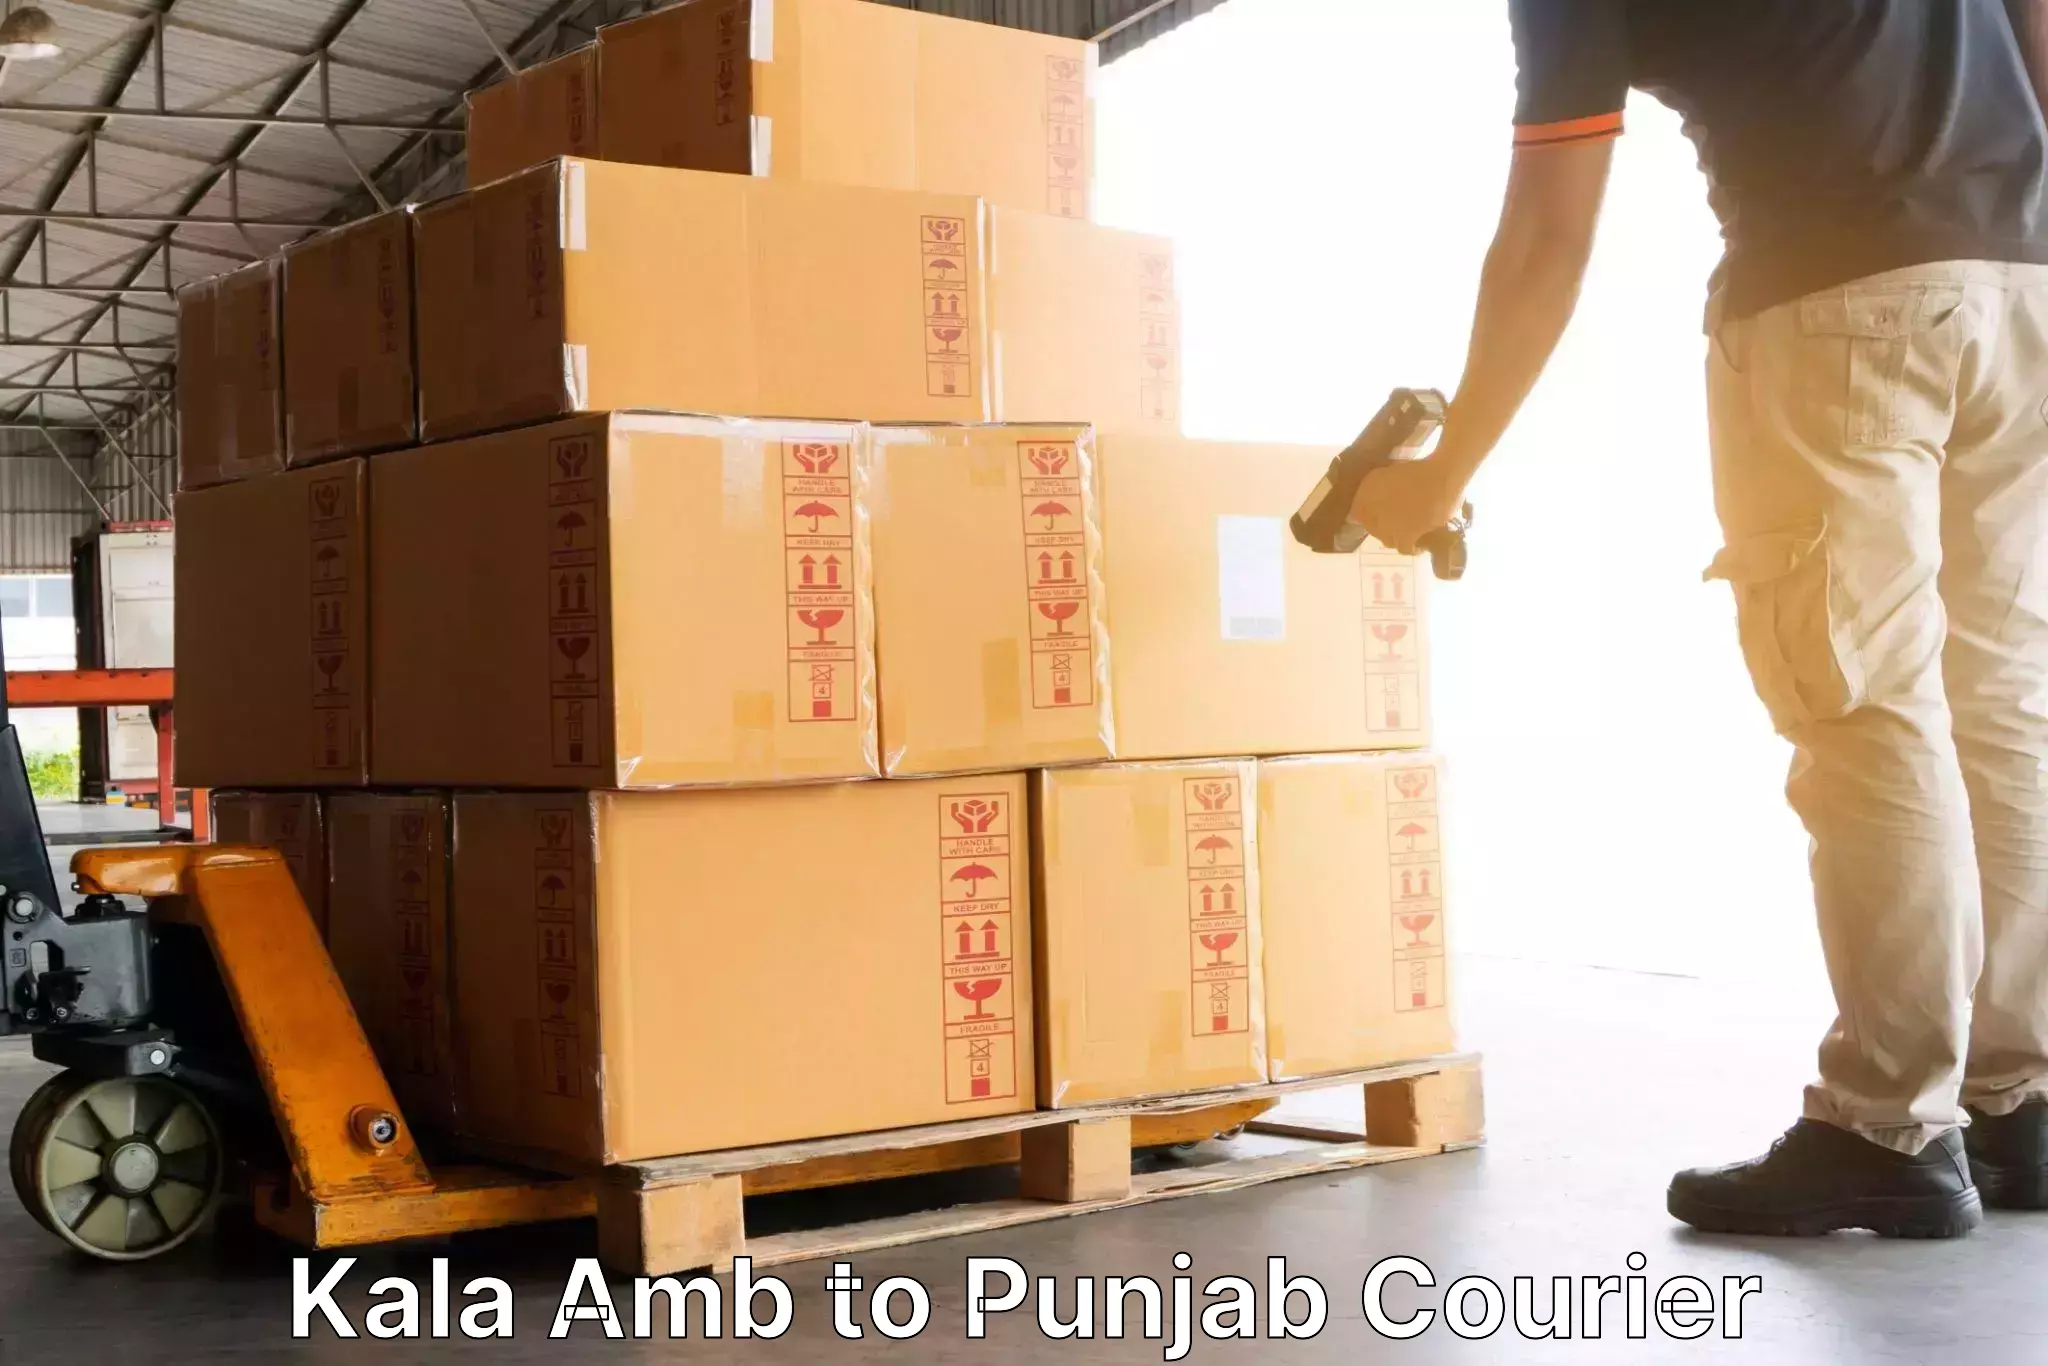 Supply chain delivery Kala Amb to Punjab